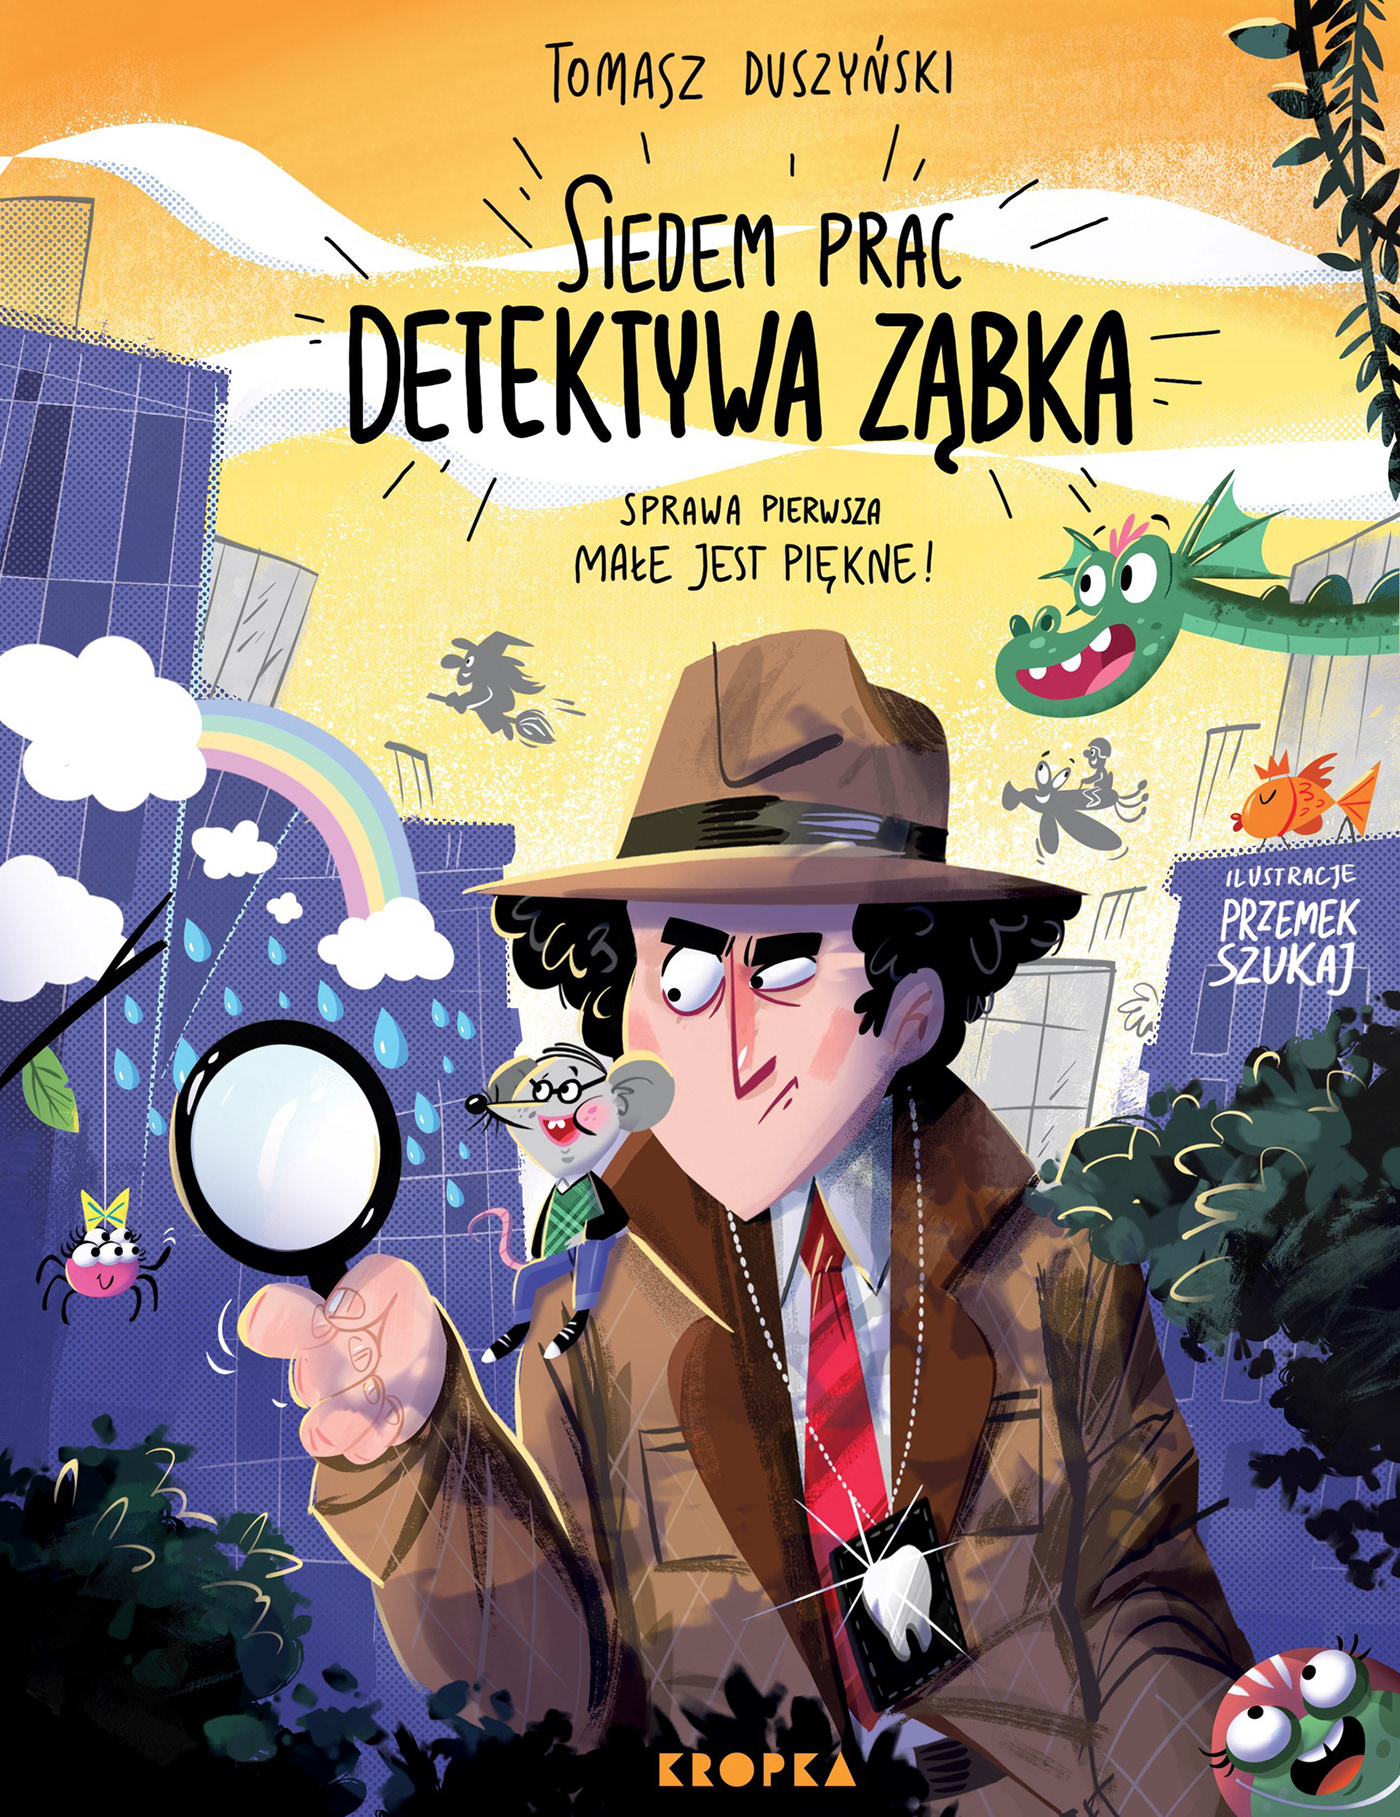 cartoon ILLUSTRATION  book cover detective criminal fantasy mouse Dragoon city